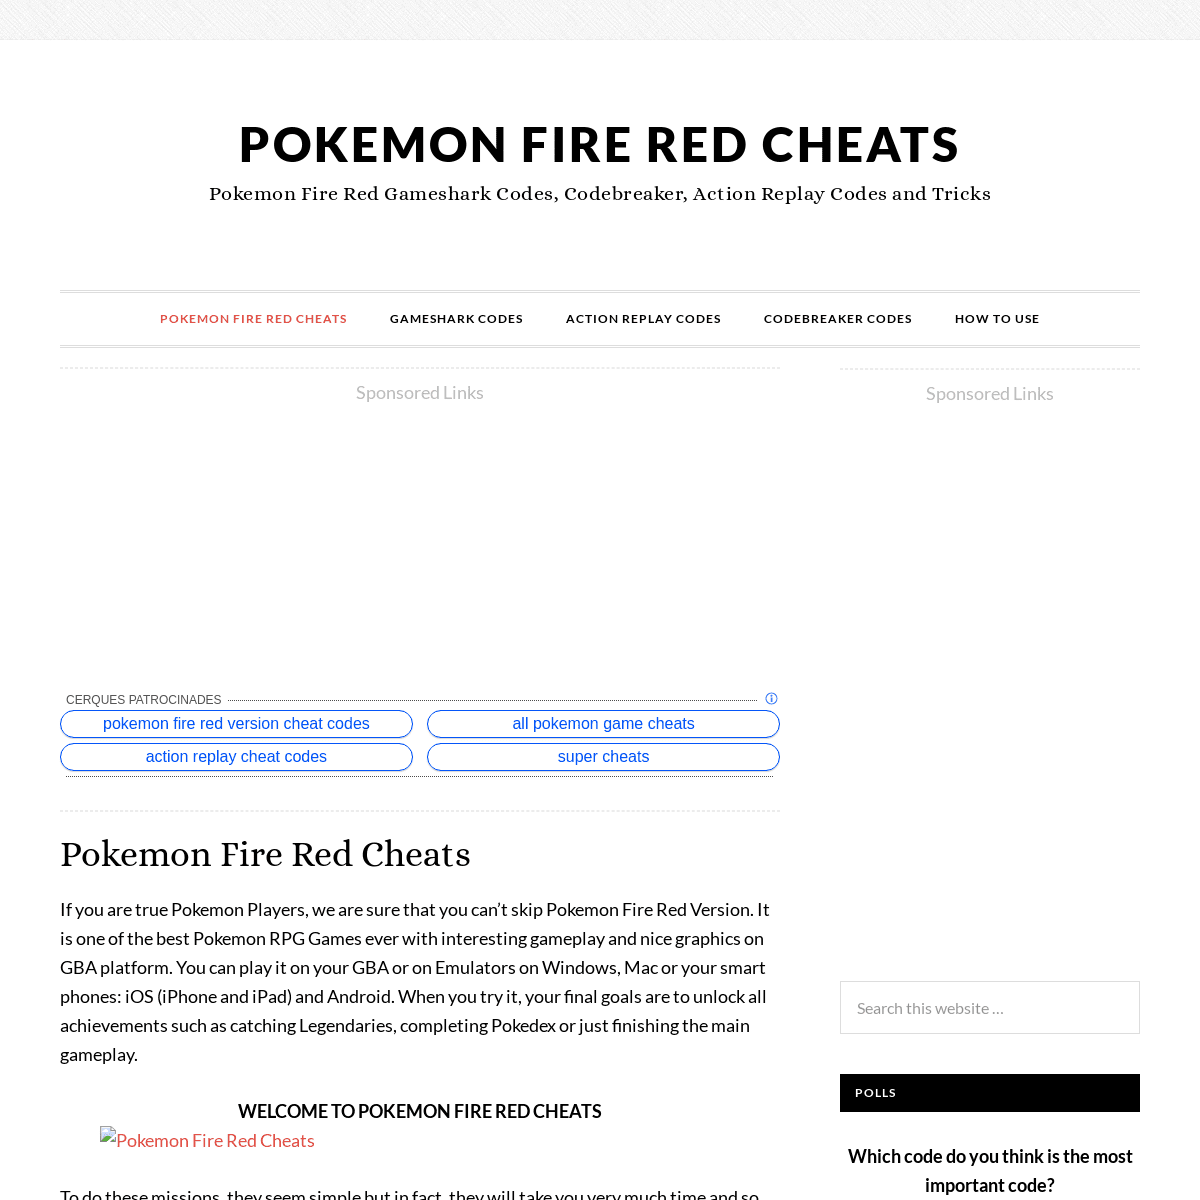 A complete backup of pokemonfireredcheats.com